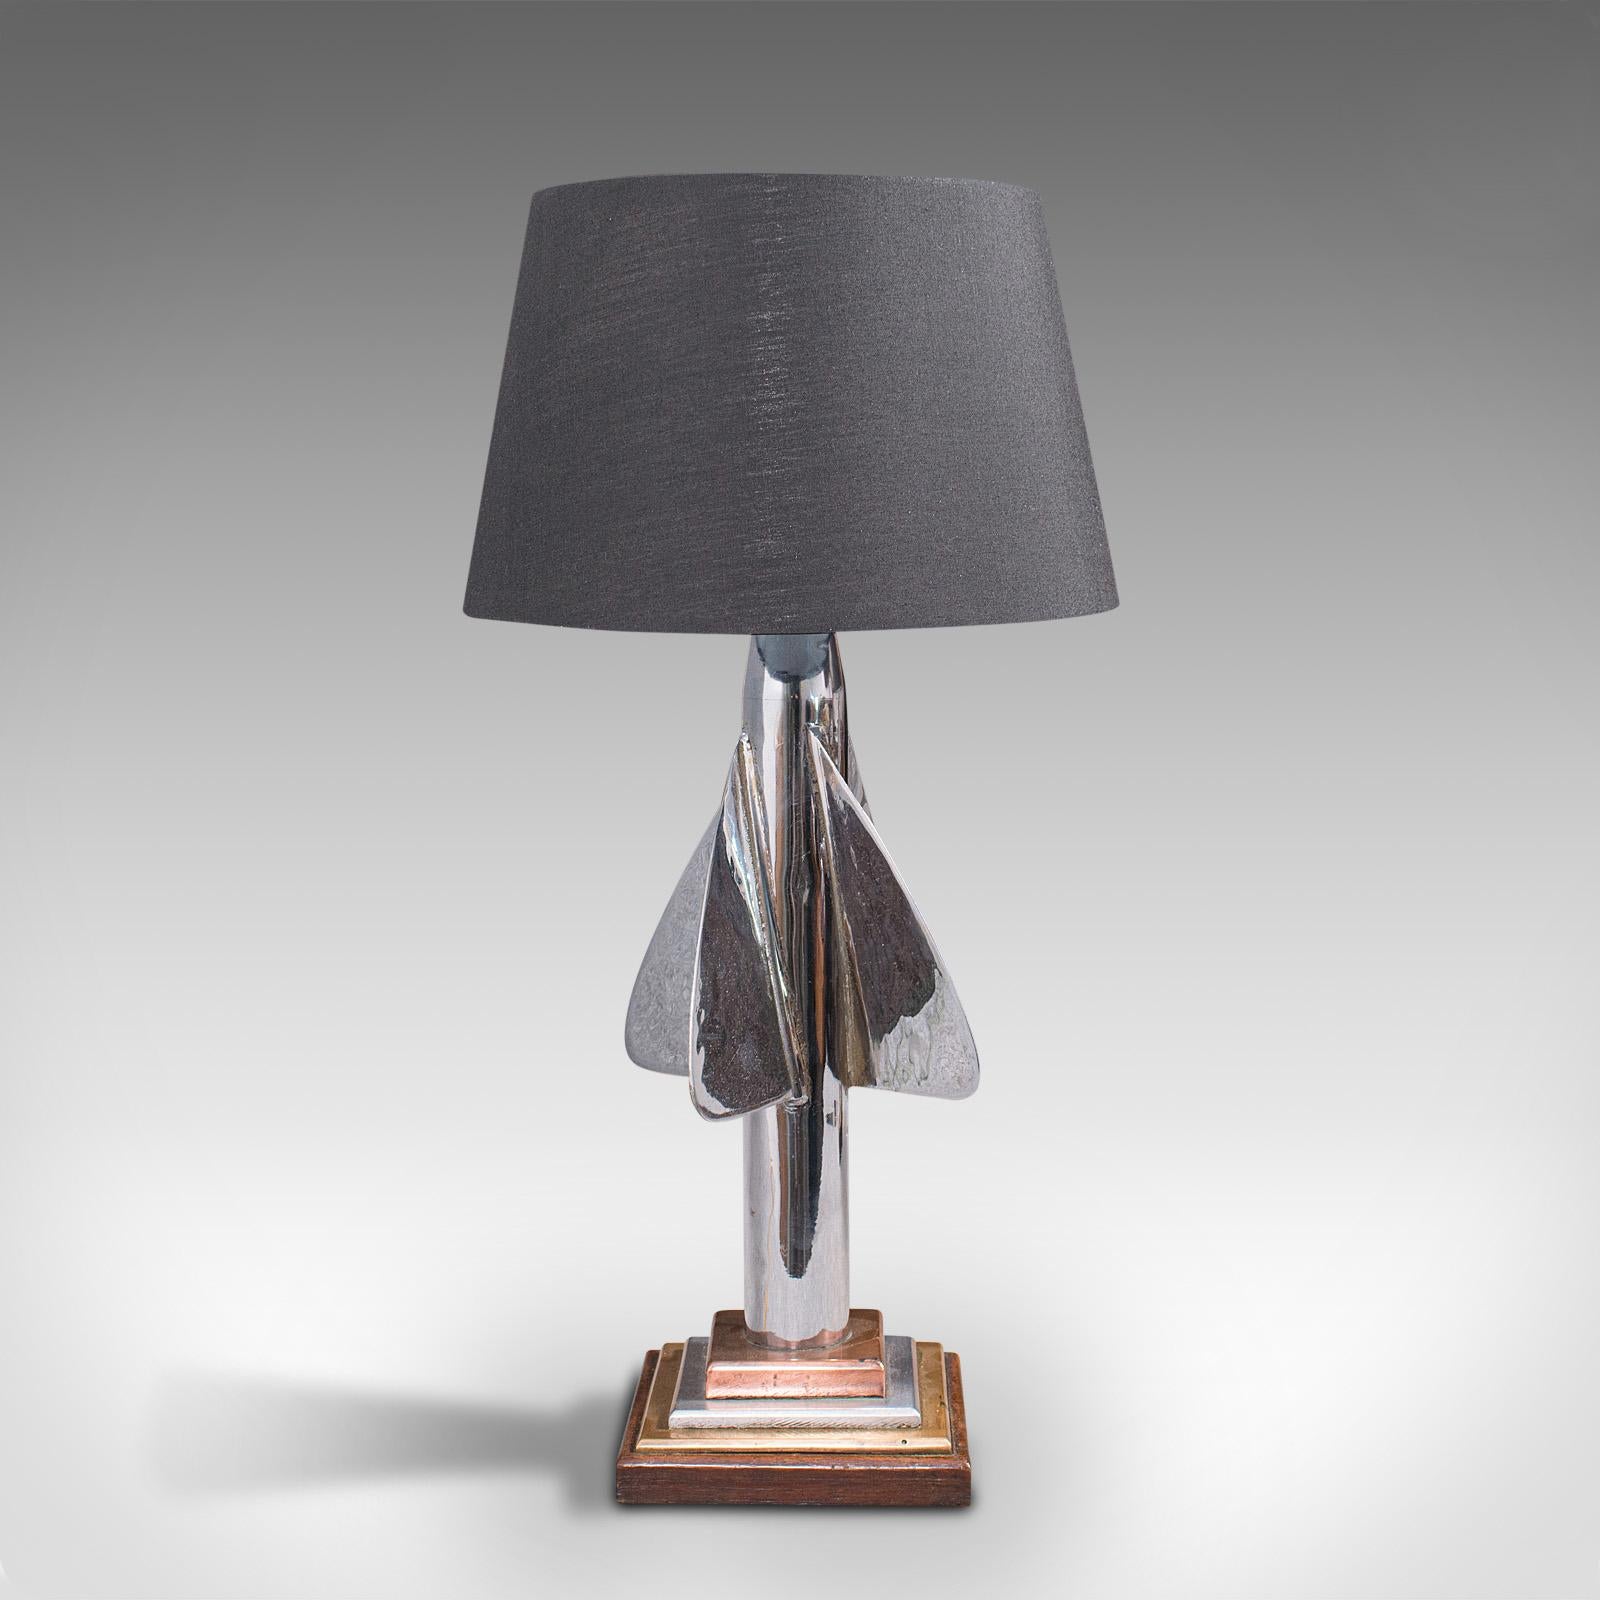 British Pair of Vintage Maritime Desk Lamps, English, Ship's Log, Table Light, C.1930 For Sale